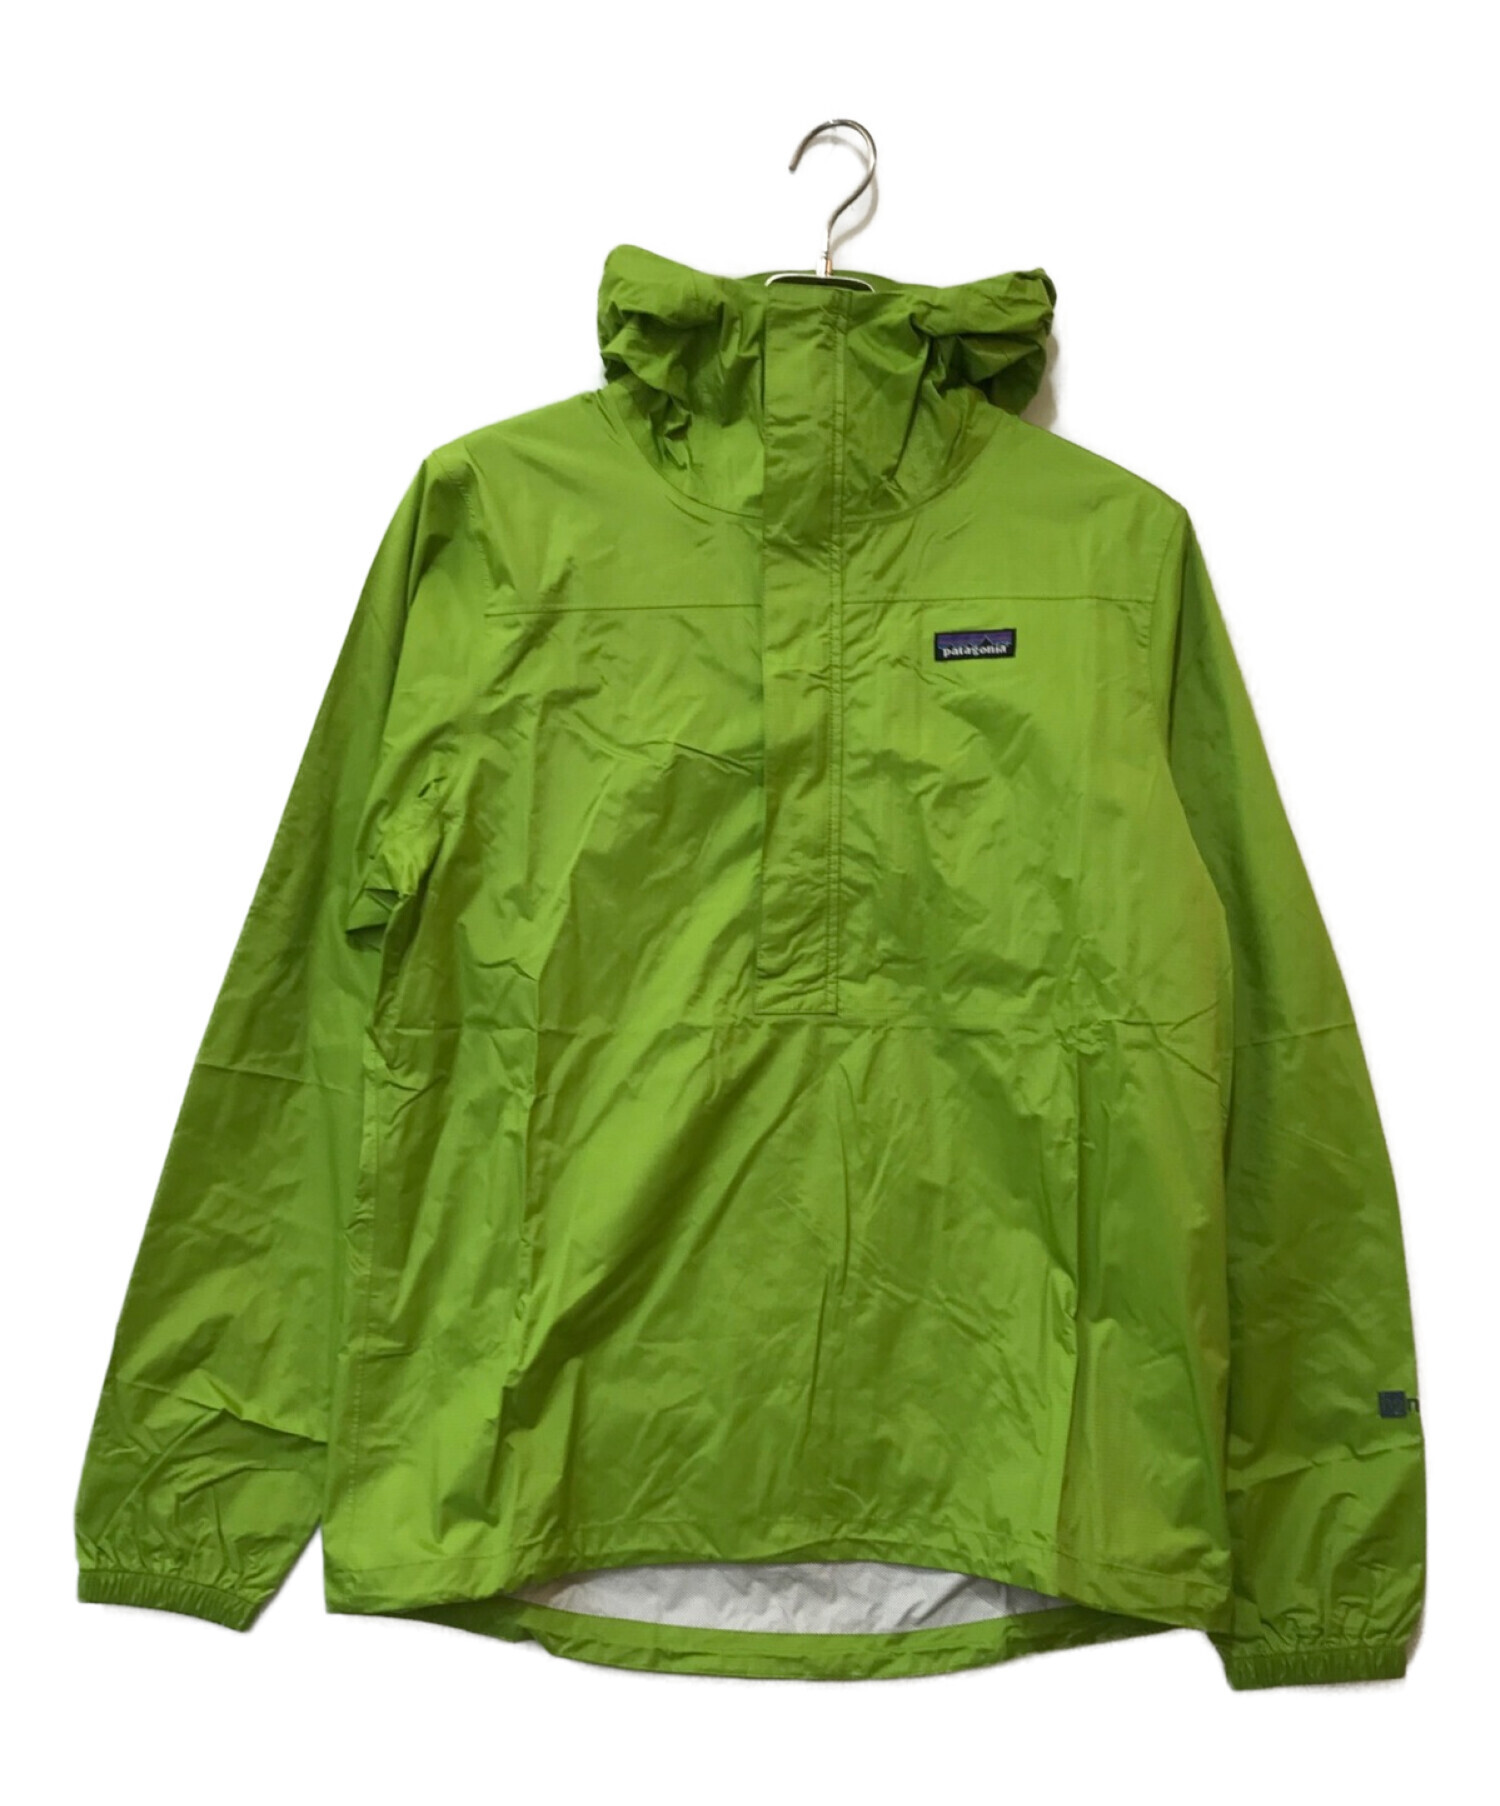 Patagonia (パタゴニア) トレントシェルプルオーバージャケット 黄緑 サイズ:M 未使用品